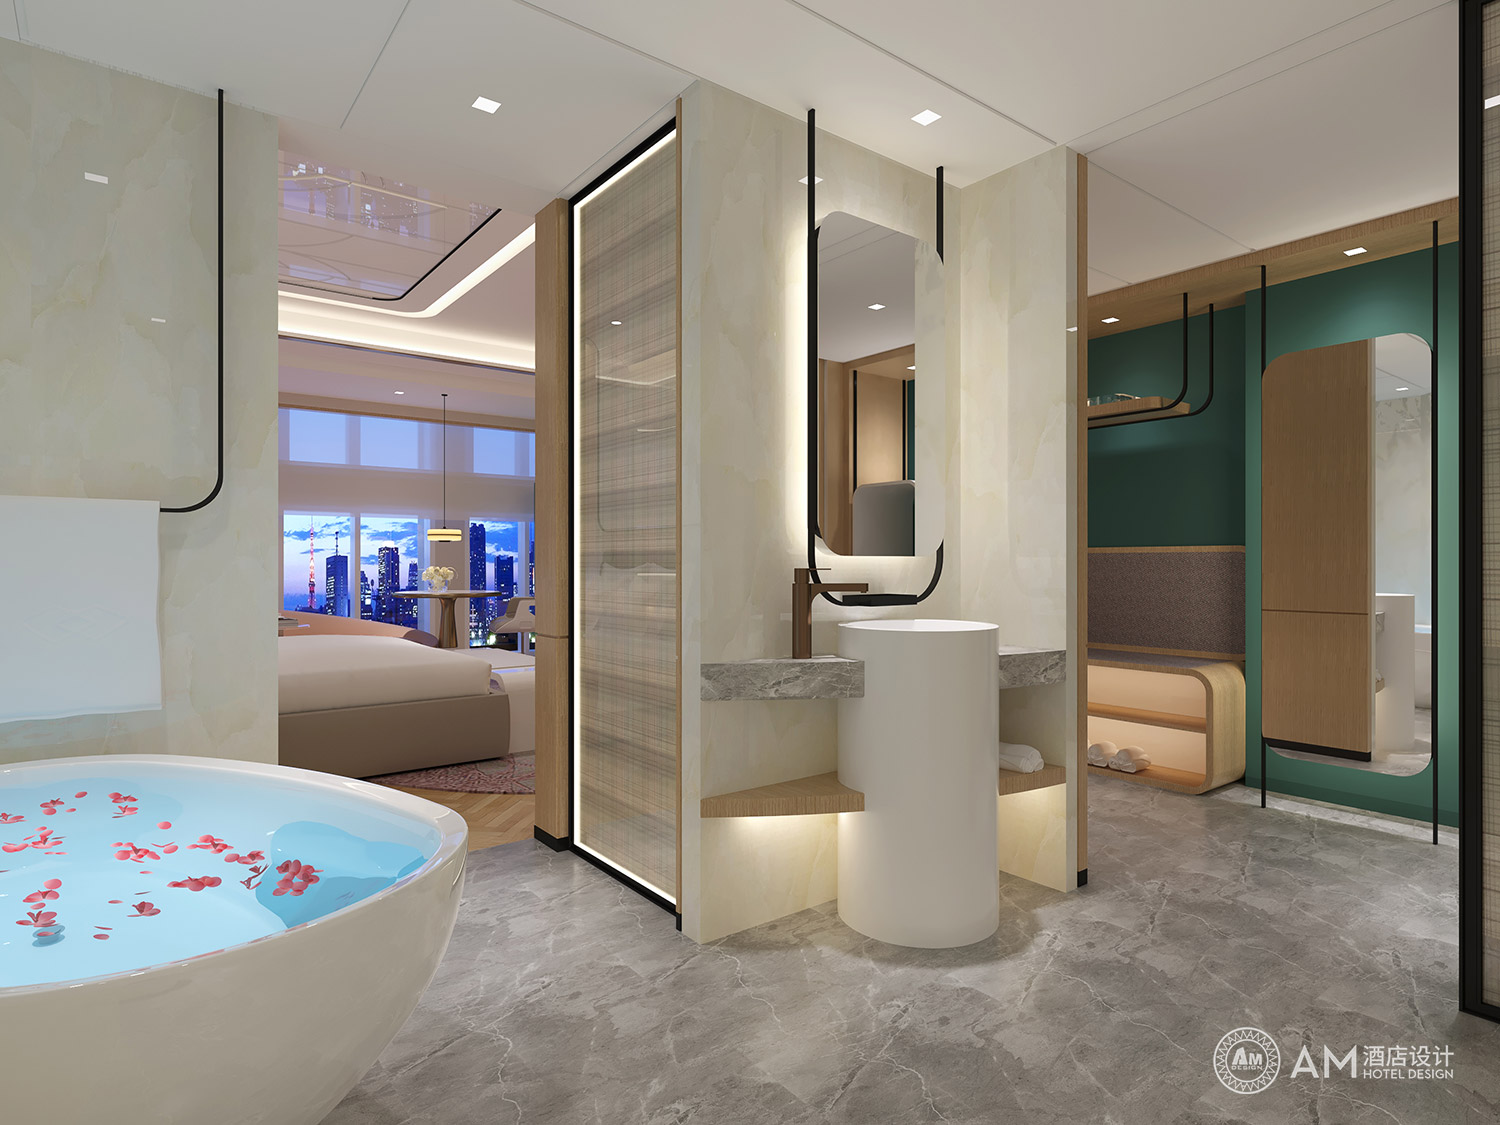 AM DESIGN | Xi'an Yuelai Hotel Guest Room Toilet Design